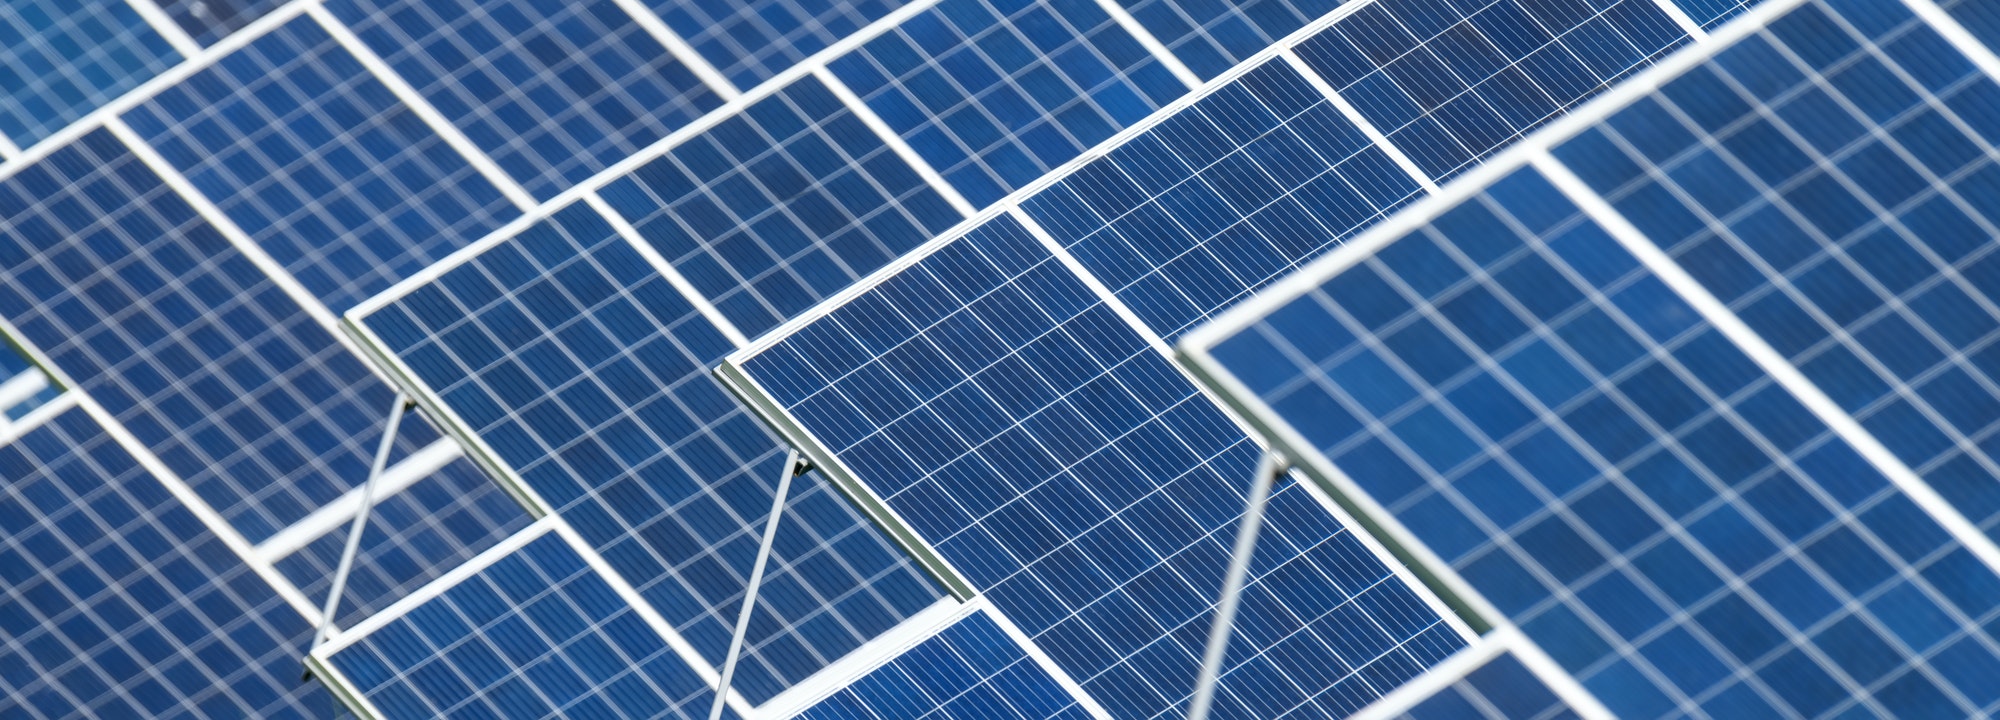 Texture Solar PV panels generate power energy